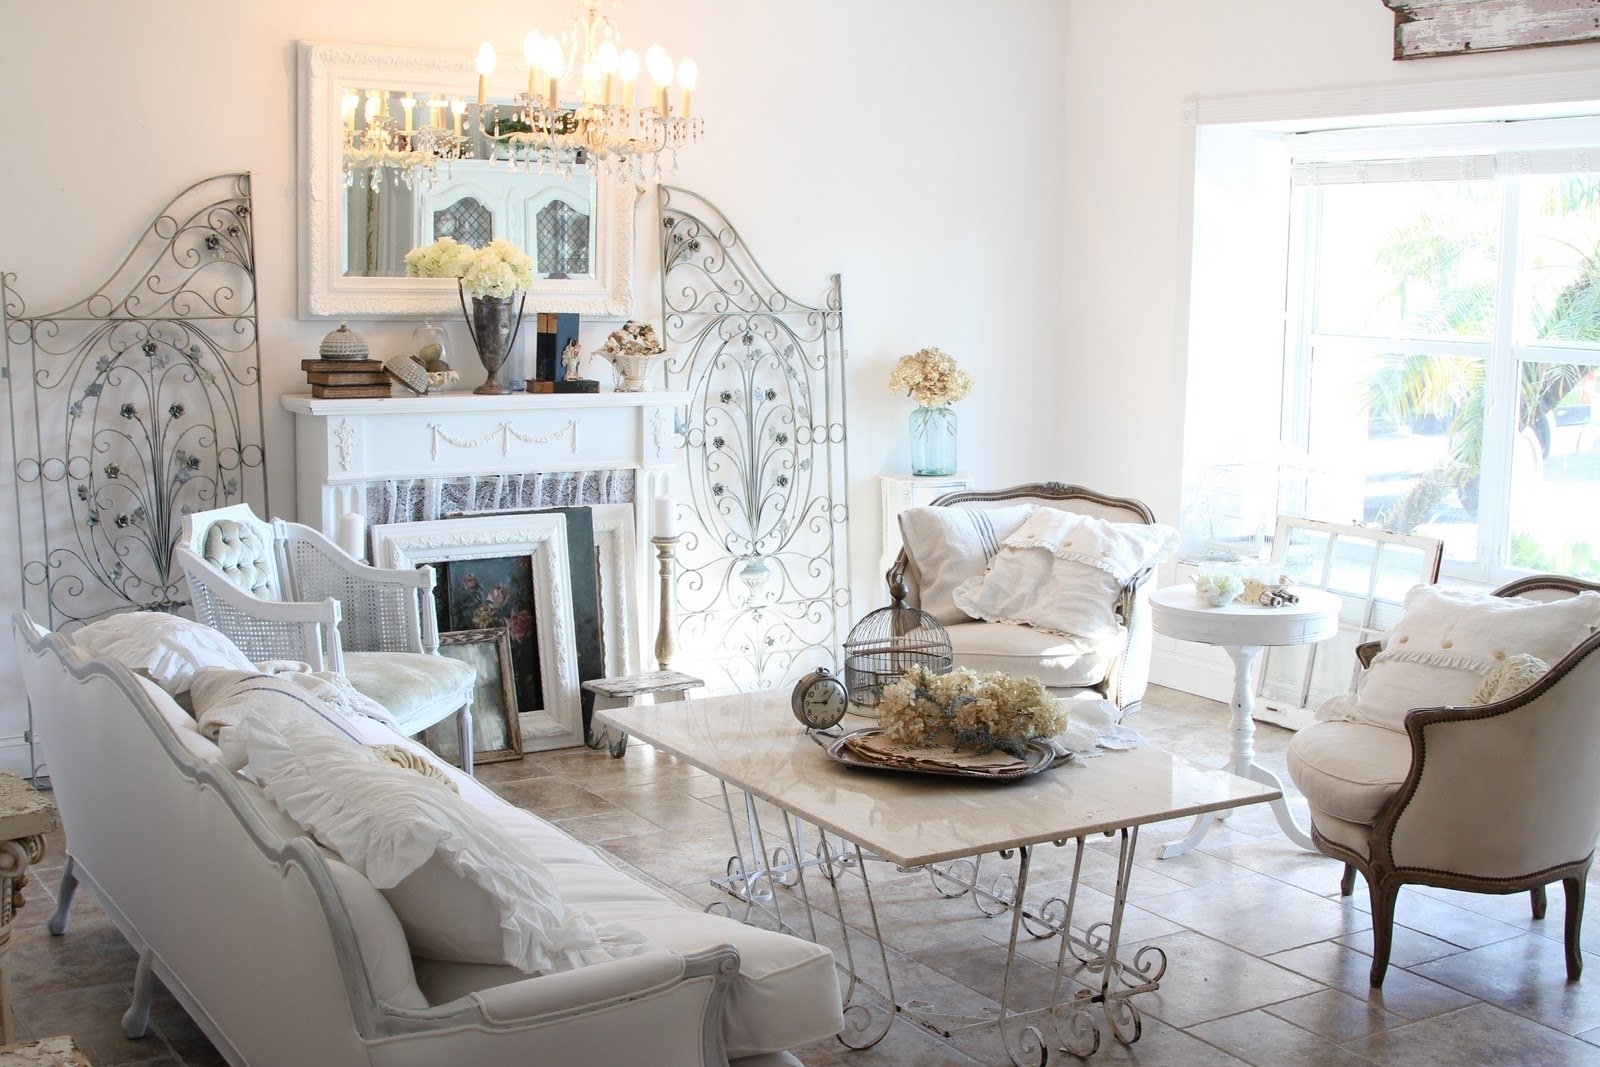 10 Trendy Shabby Chic Living Room Ideas ways to decorating a shabby chic living room in style oop living room 2022